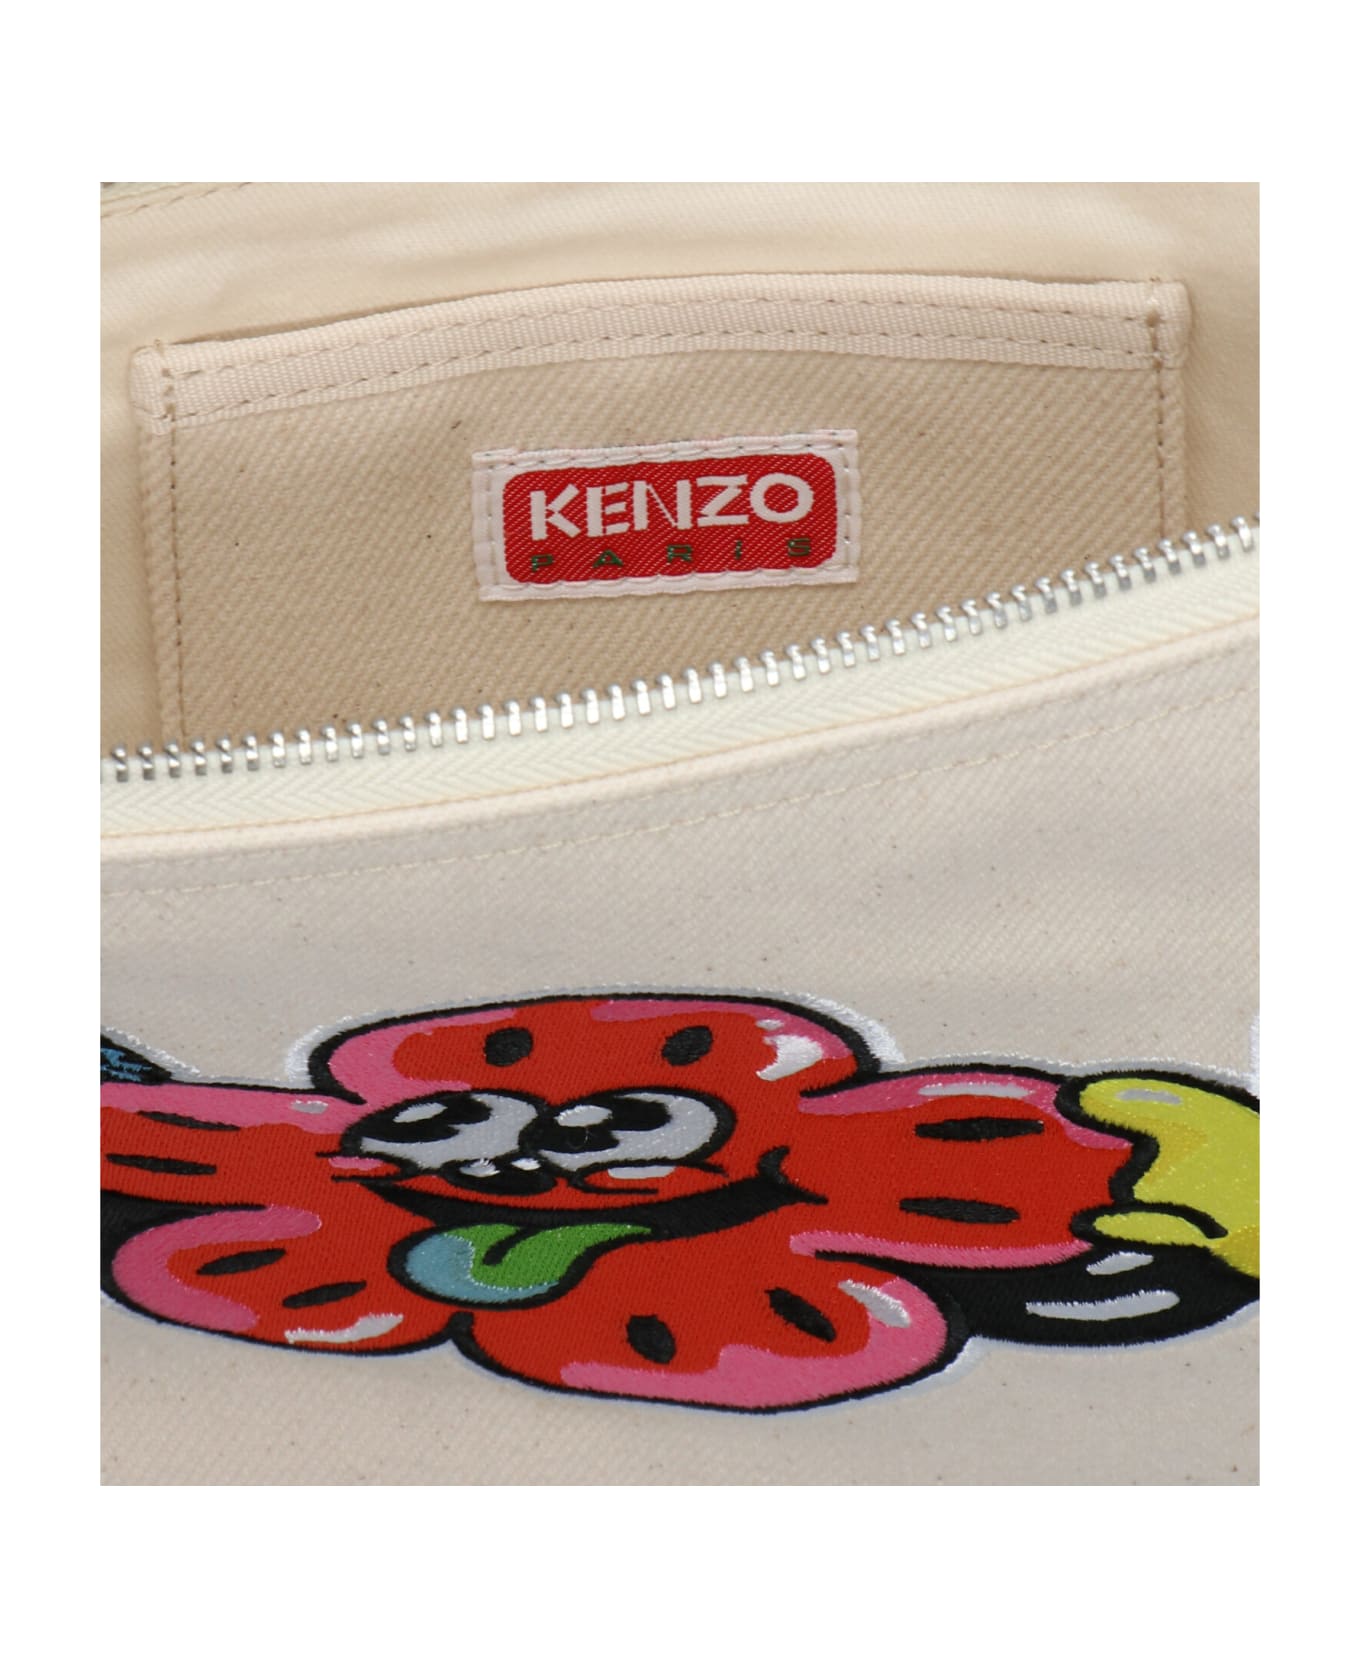 Kenzo Embroidered Clutch - Ecru